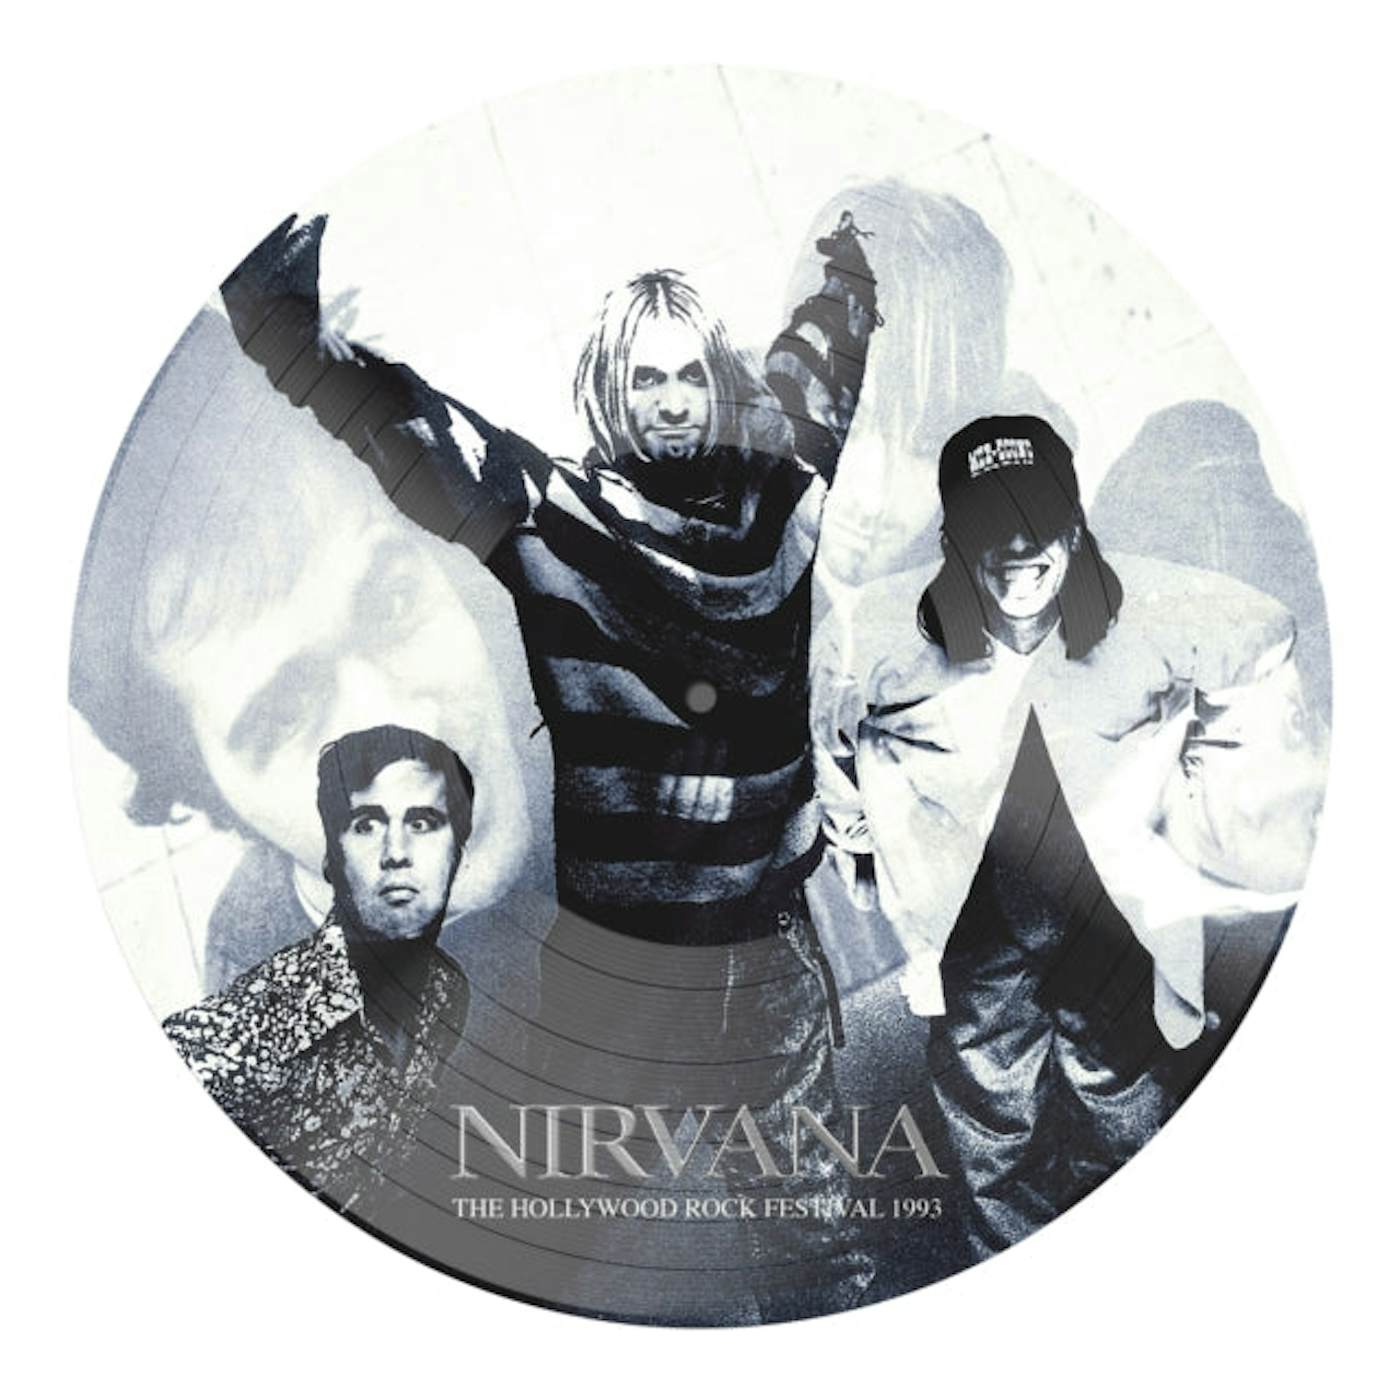 Nirvana LP Vinyl Record - Hollywood Rock Festival 19 93 (Picture Disc)